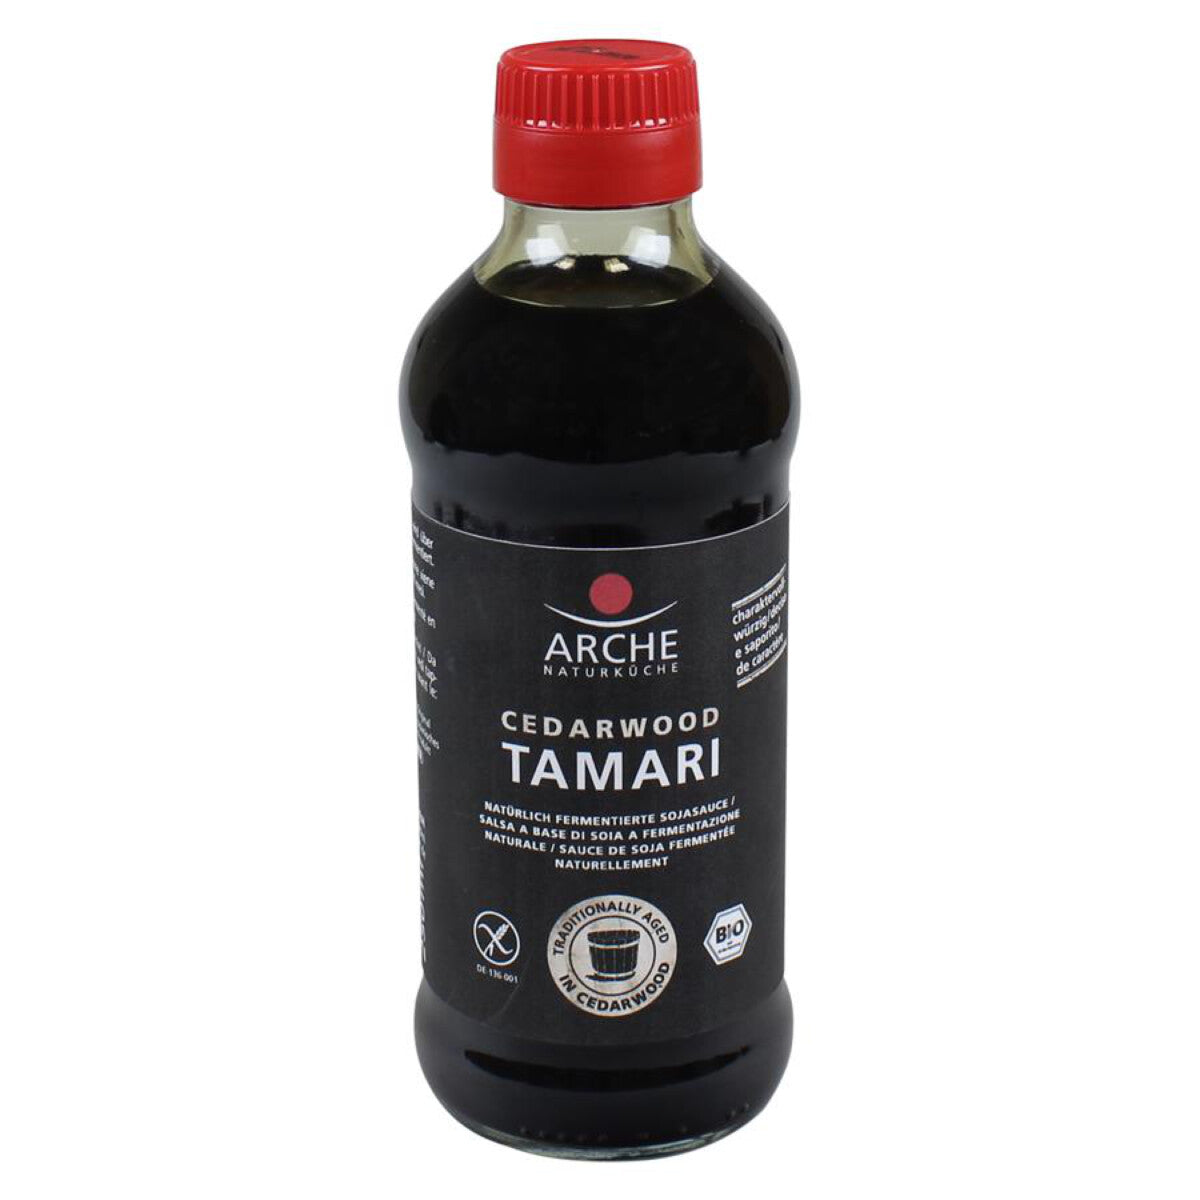 ARCHE Tamari Cedarwood - 250 ml